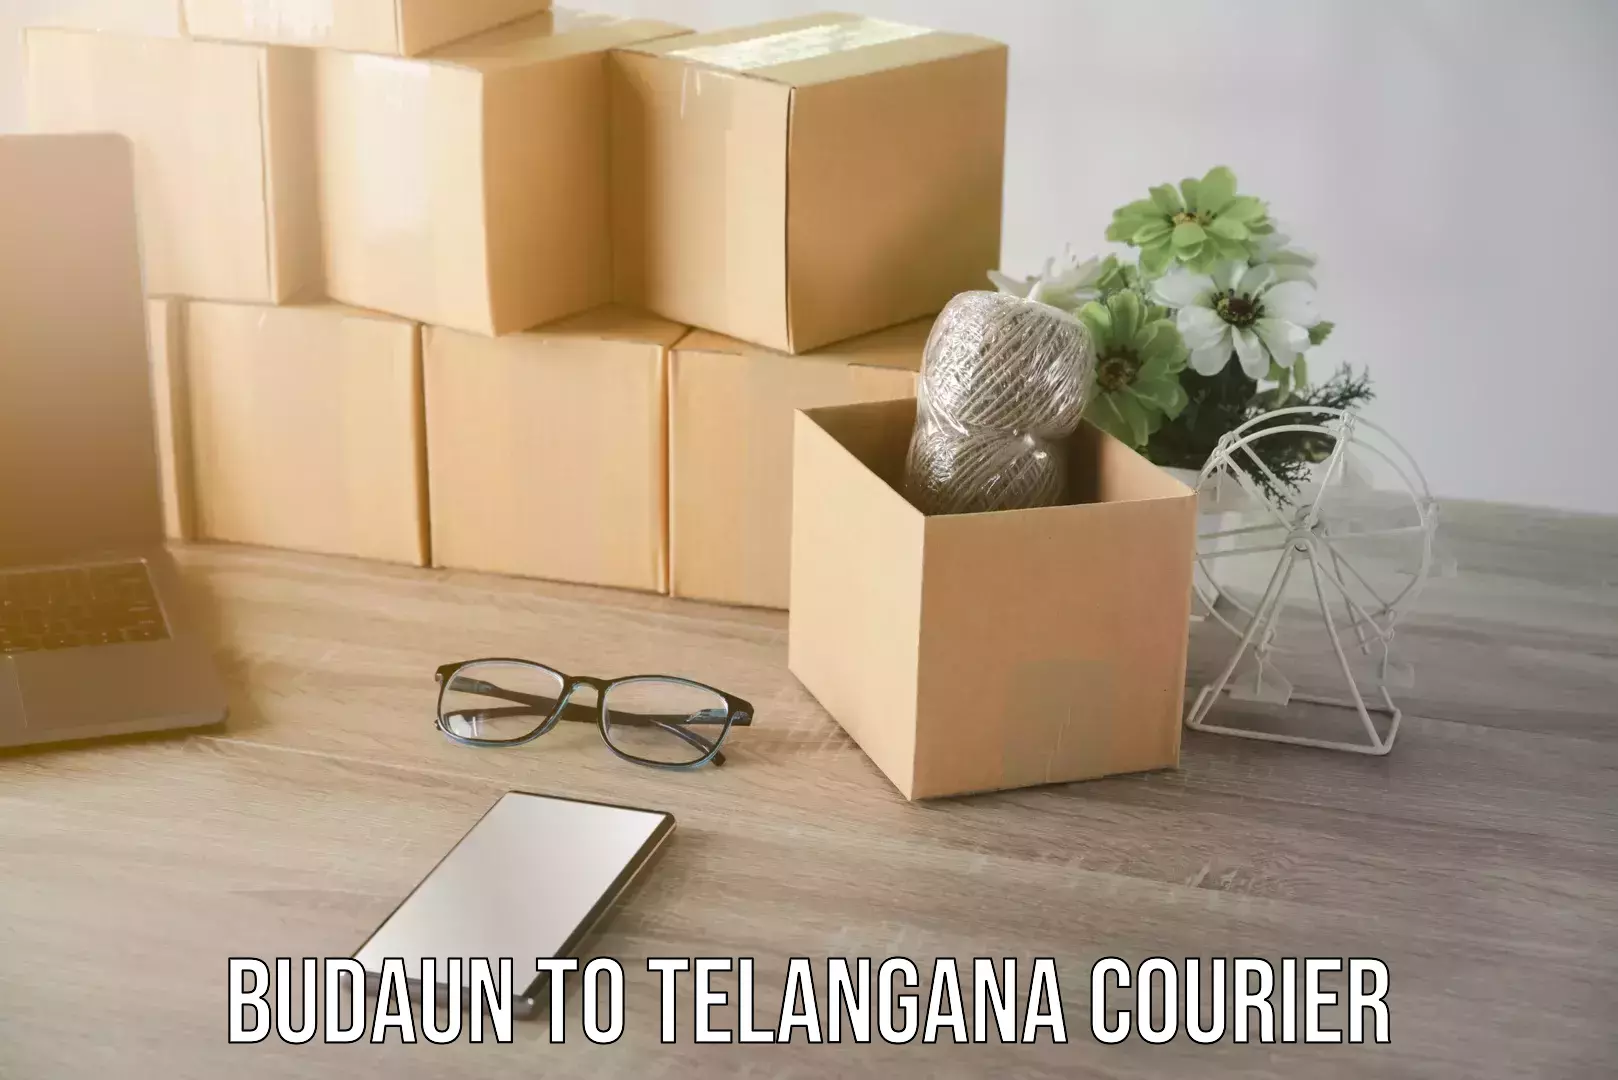 Efficient order fulfillment Budaun to Telangana